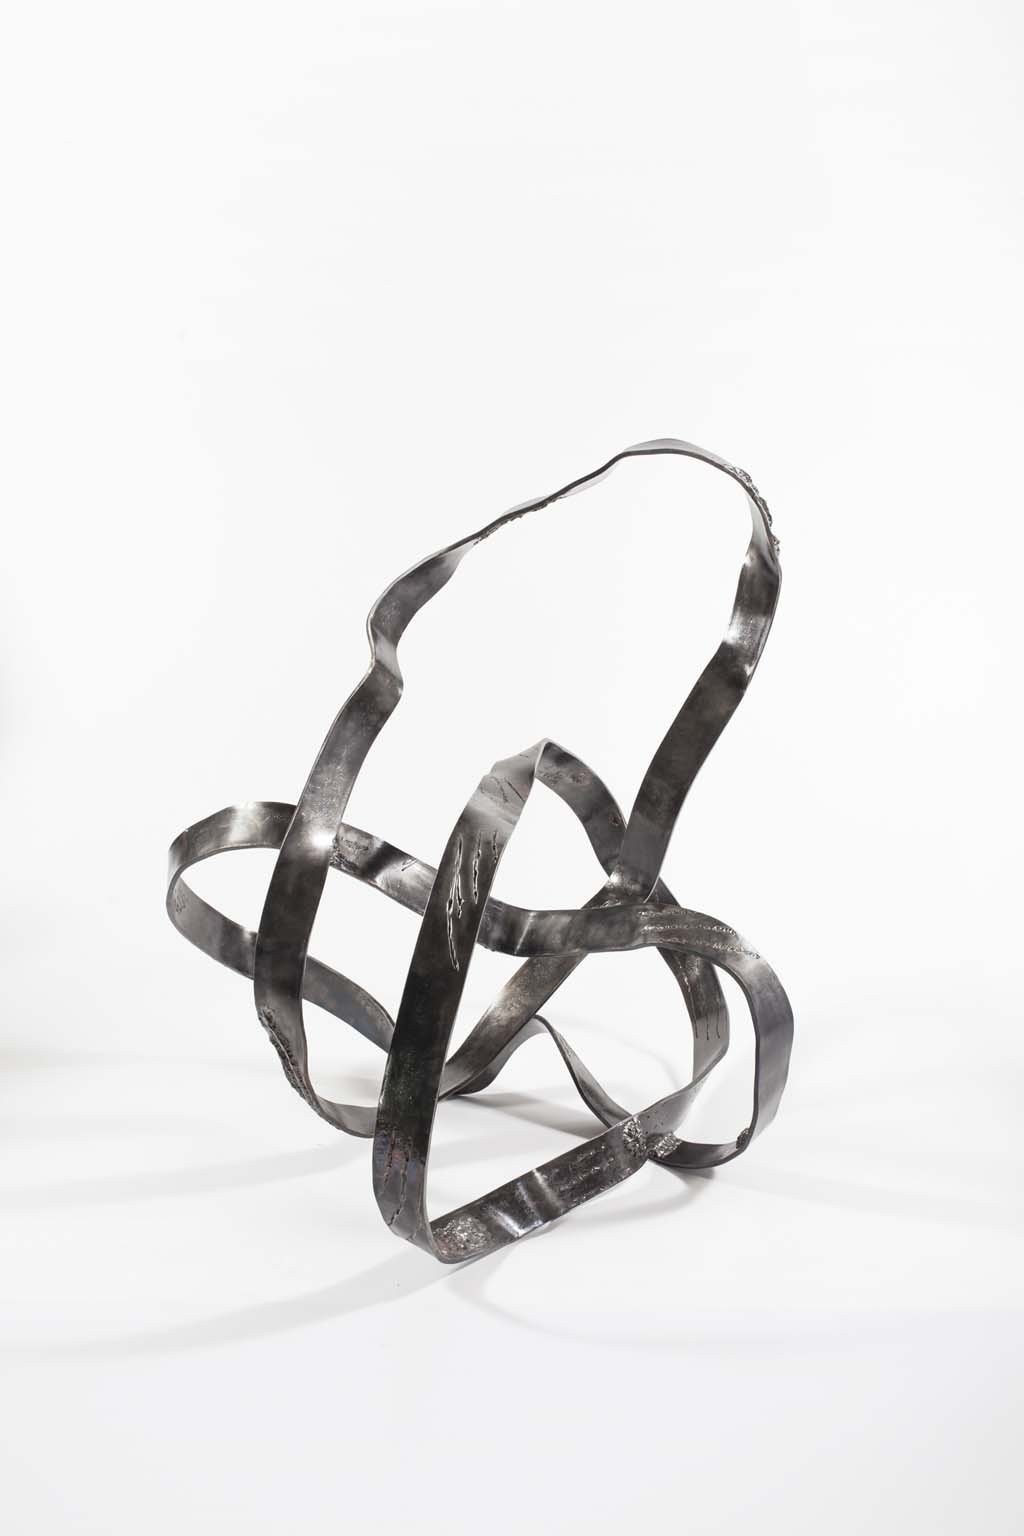 Oblivion III | 2016 | Iron & brass Sculpture| 80x120x70 cm | Rami Ater